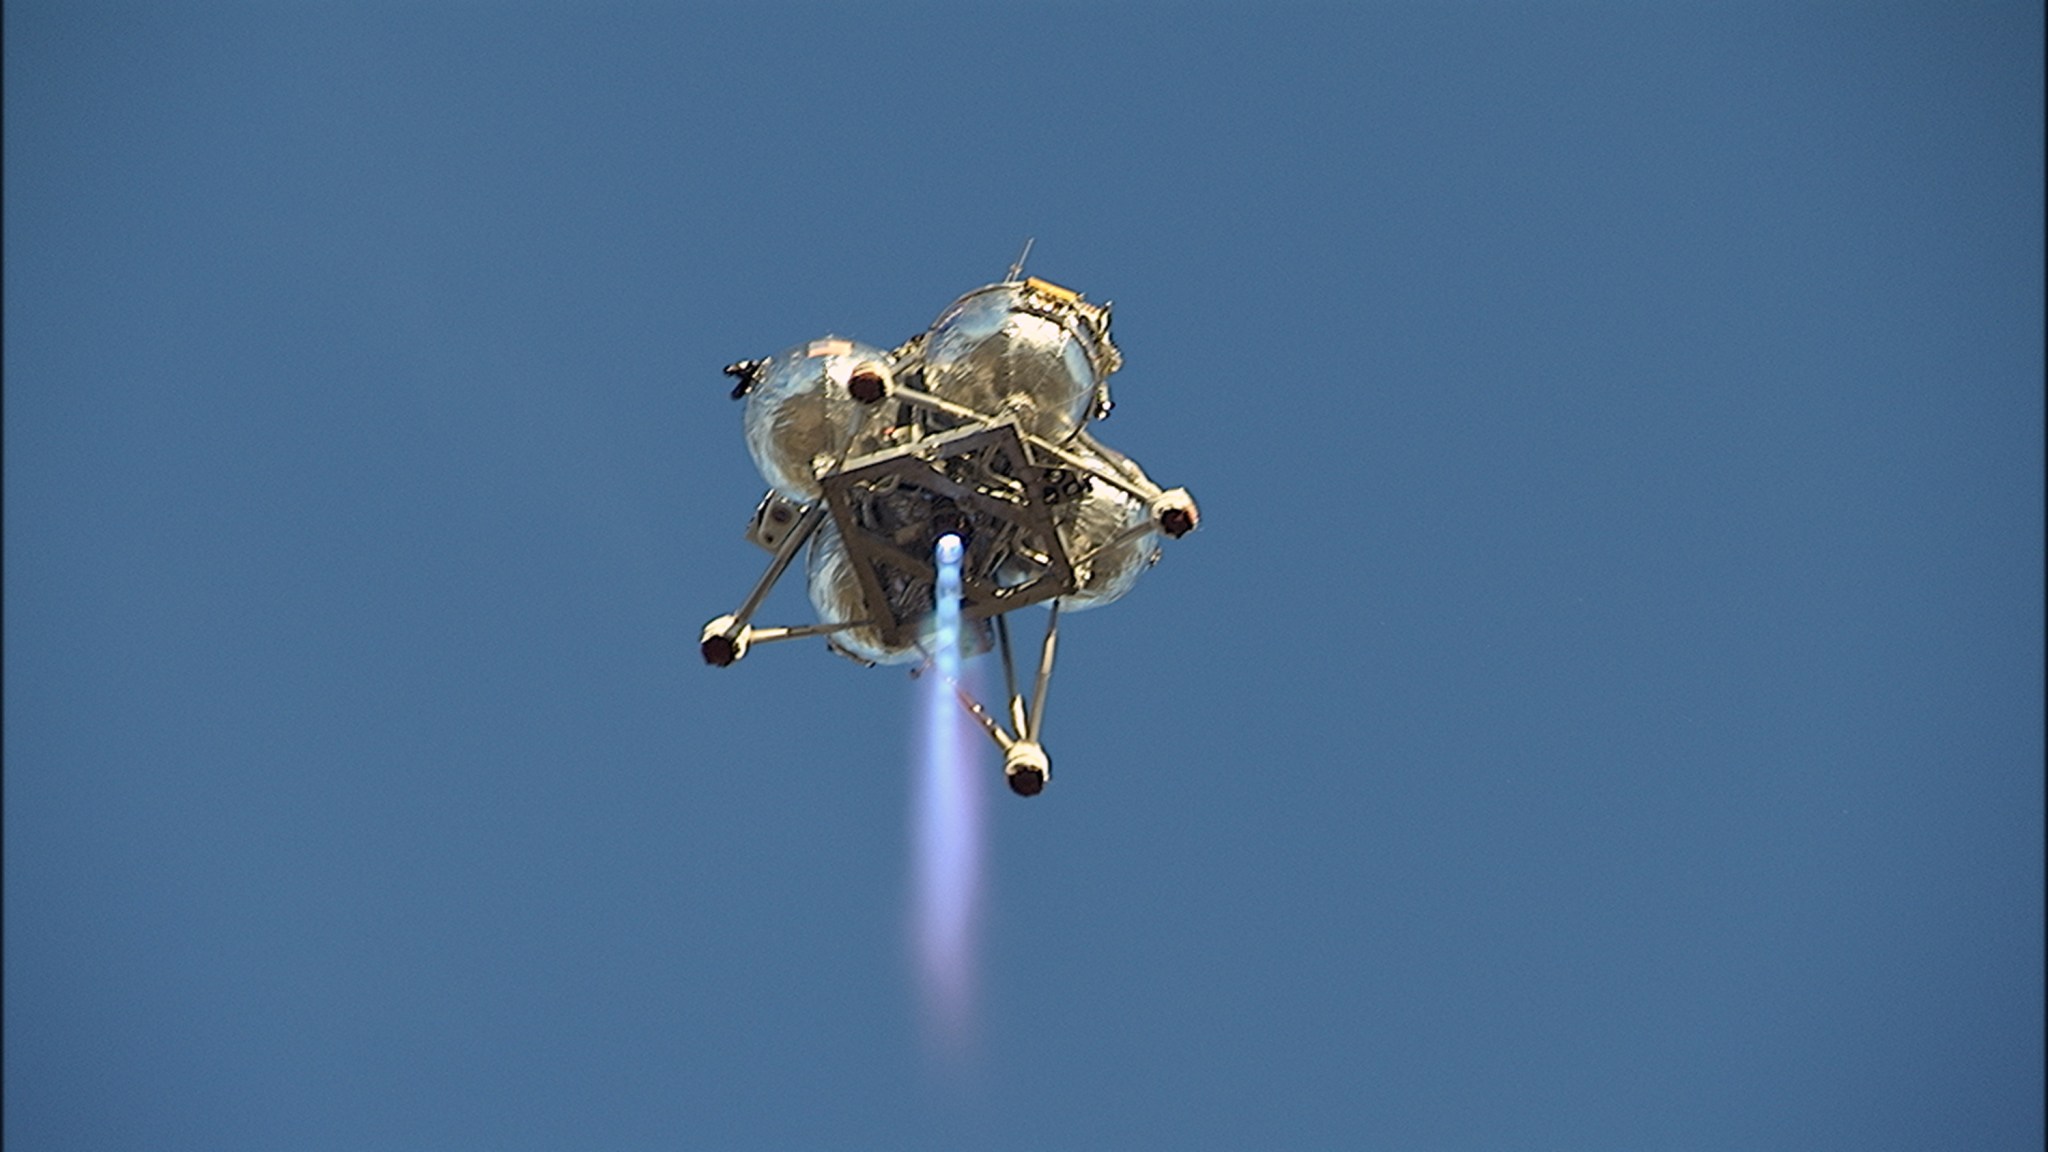 Morpheus prototype lander soars overhead during free flight test No. 15.